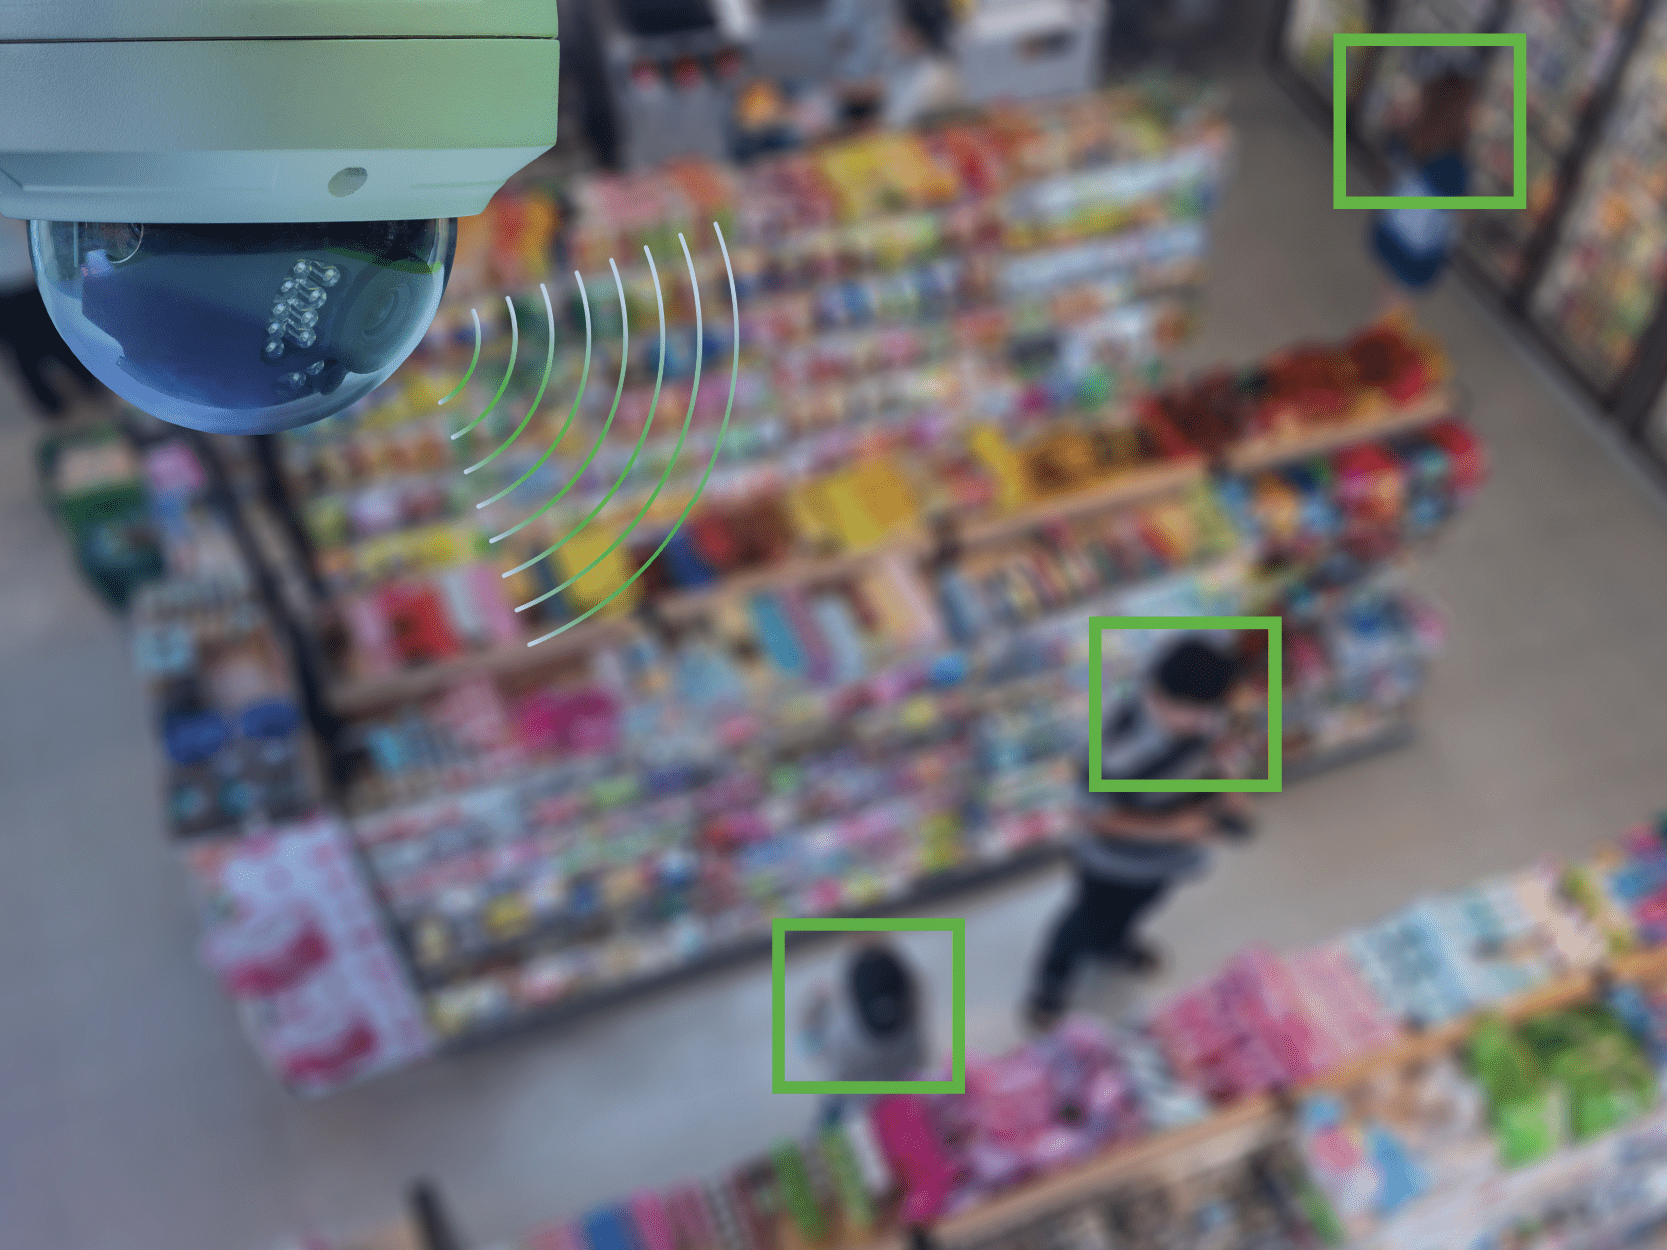 Eagle Eye Networks cloud video surveillance for convenience stores